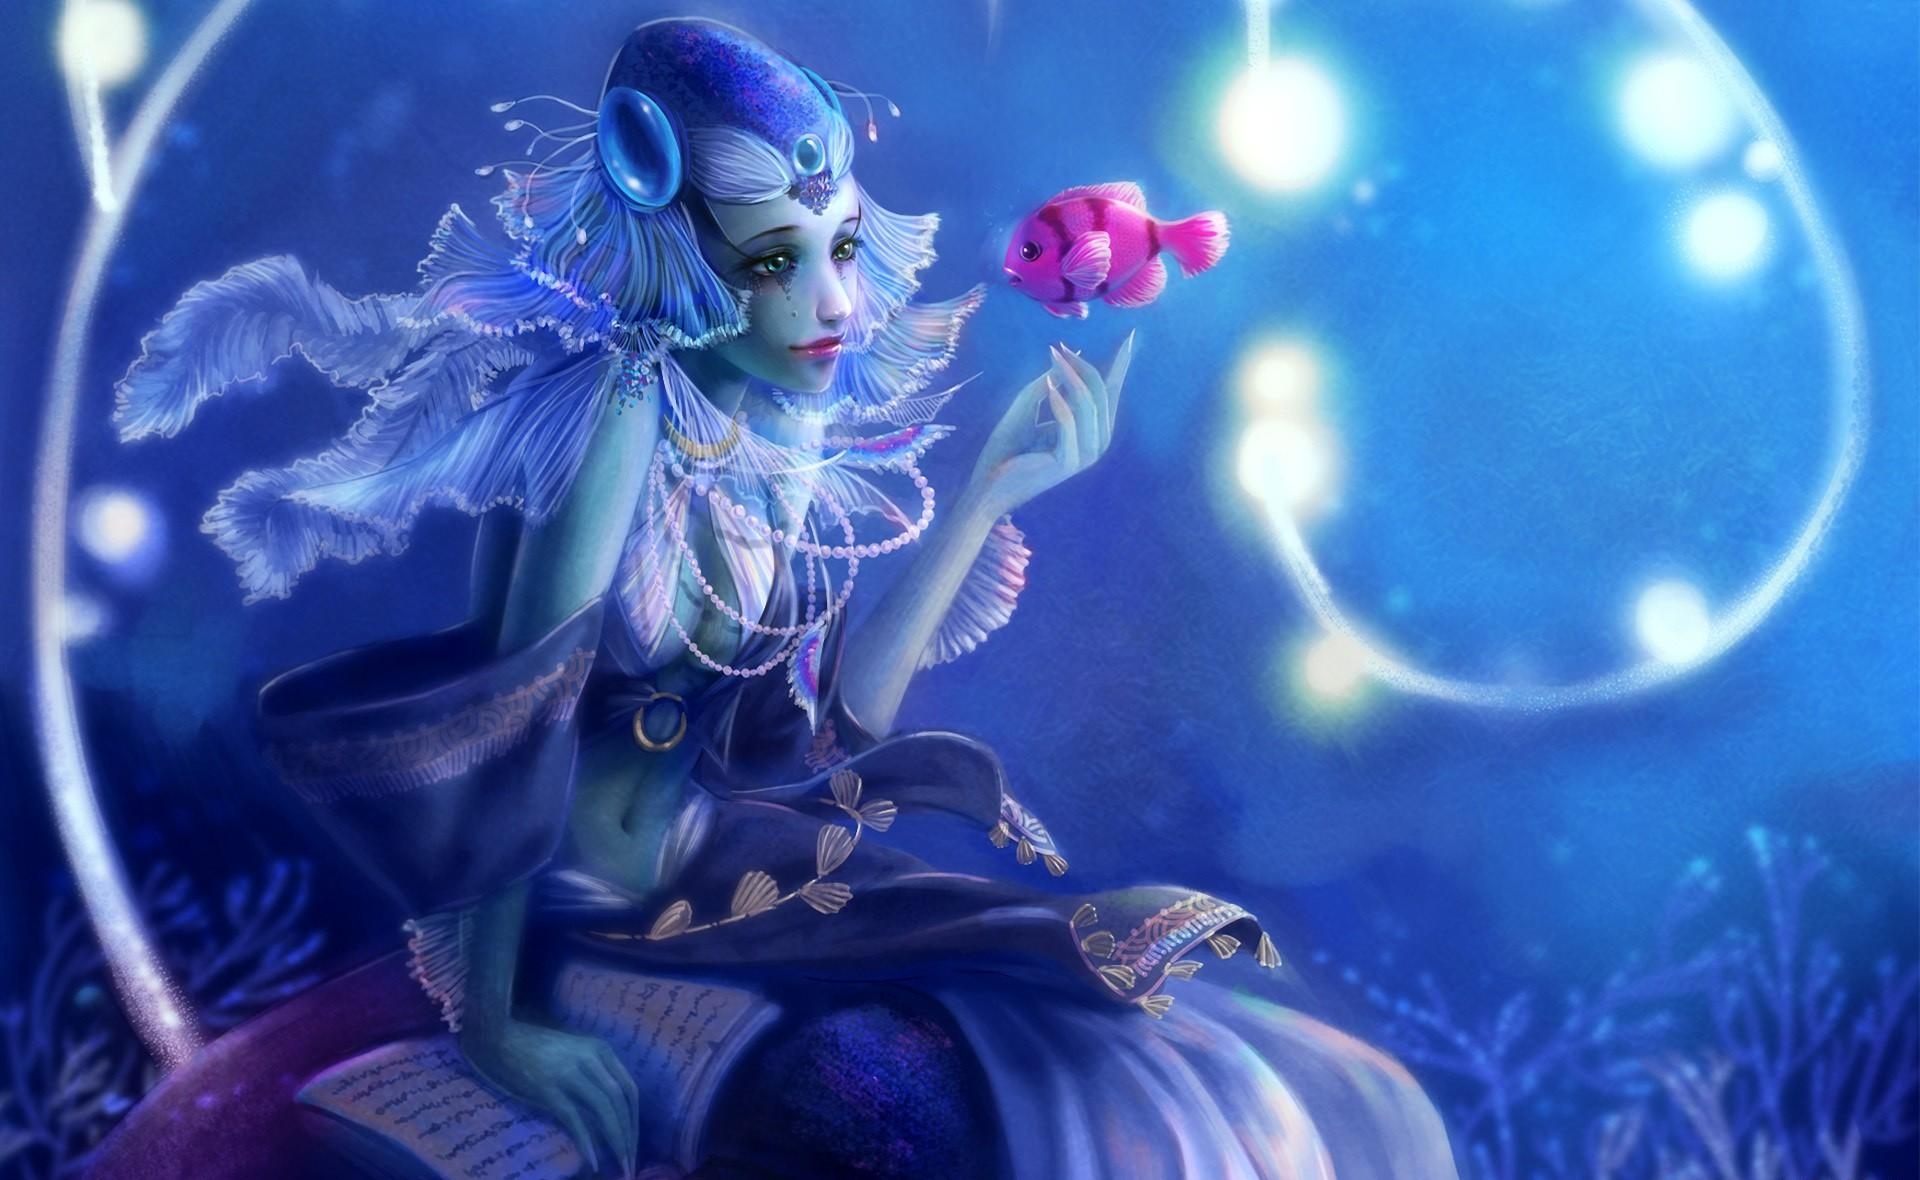 mermaid, ornaments, water Wallpaper, HD Fantasy 4K Wallpapers, Images